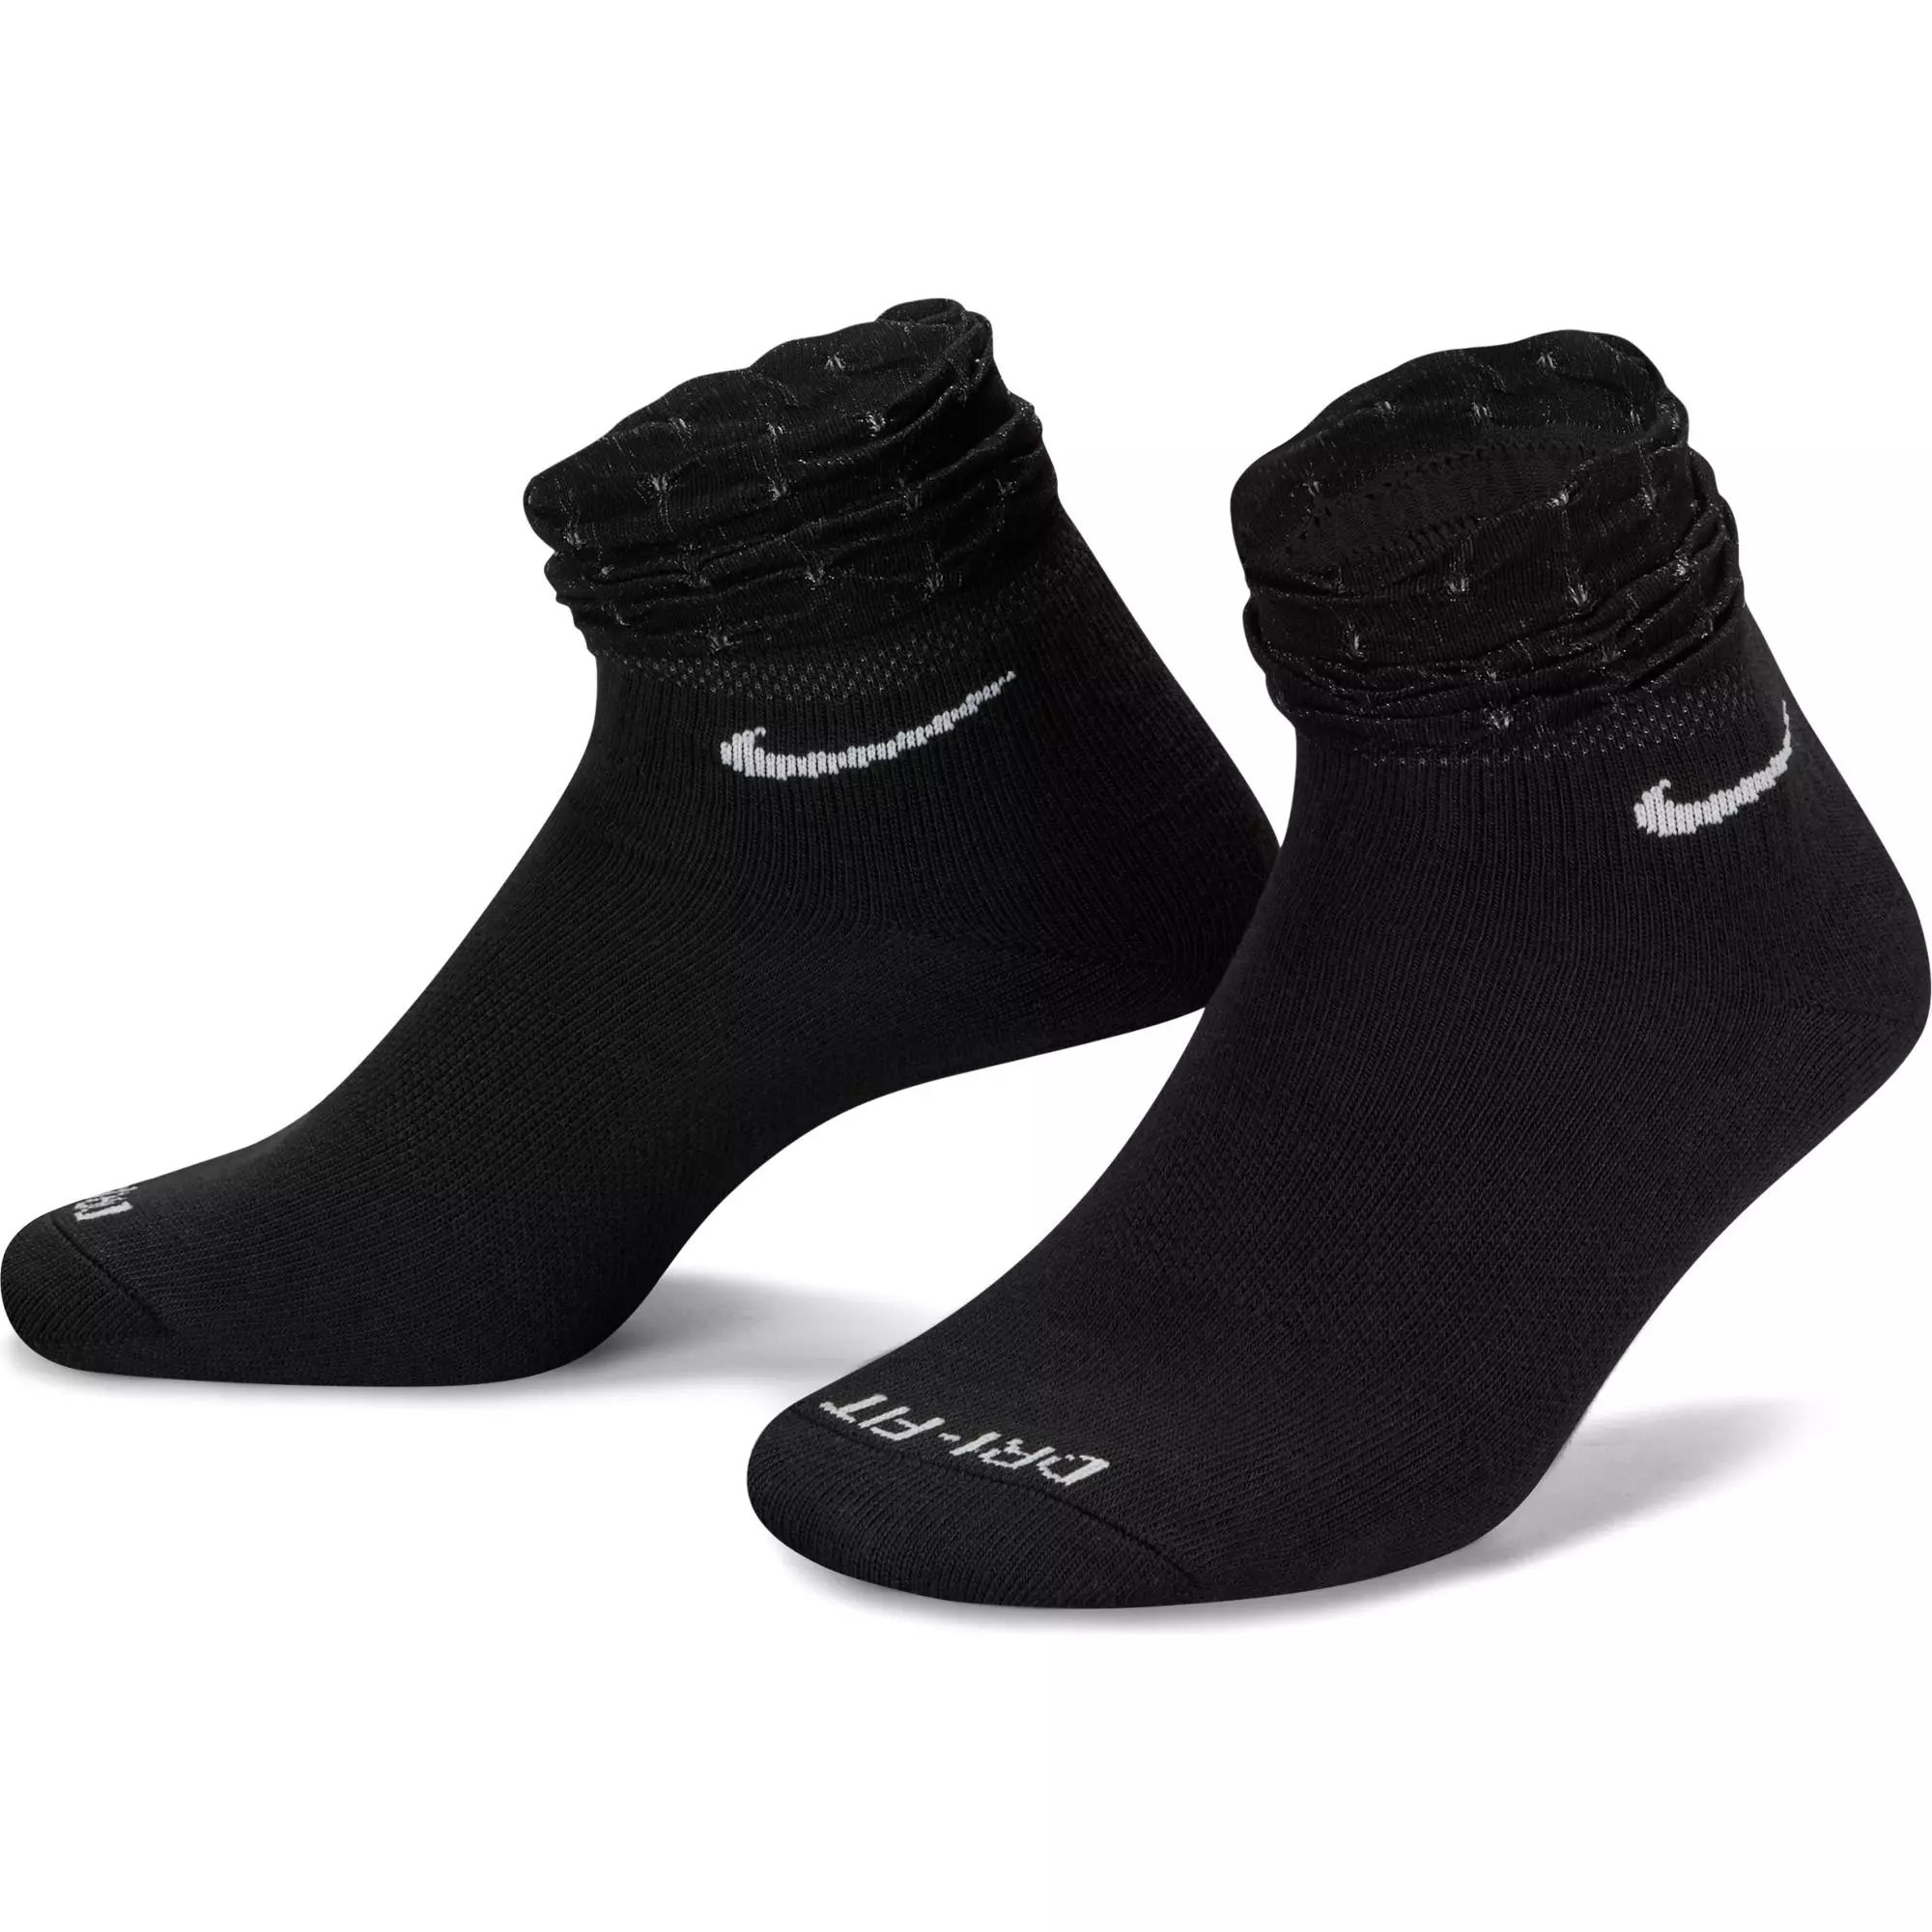 Nike Women's Ruffle Shuffle Ankle Socks